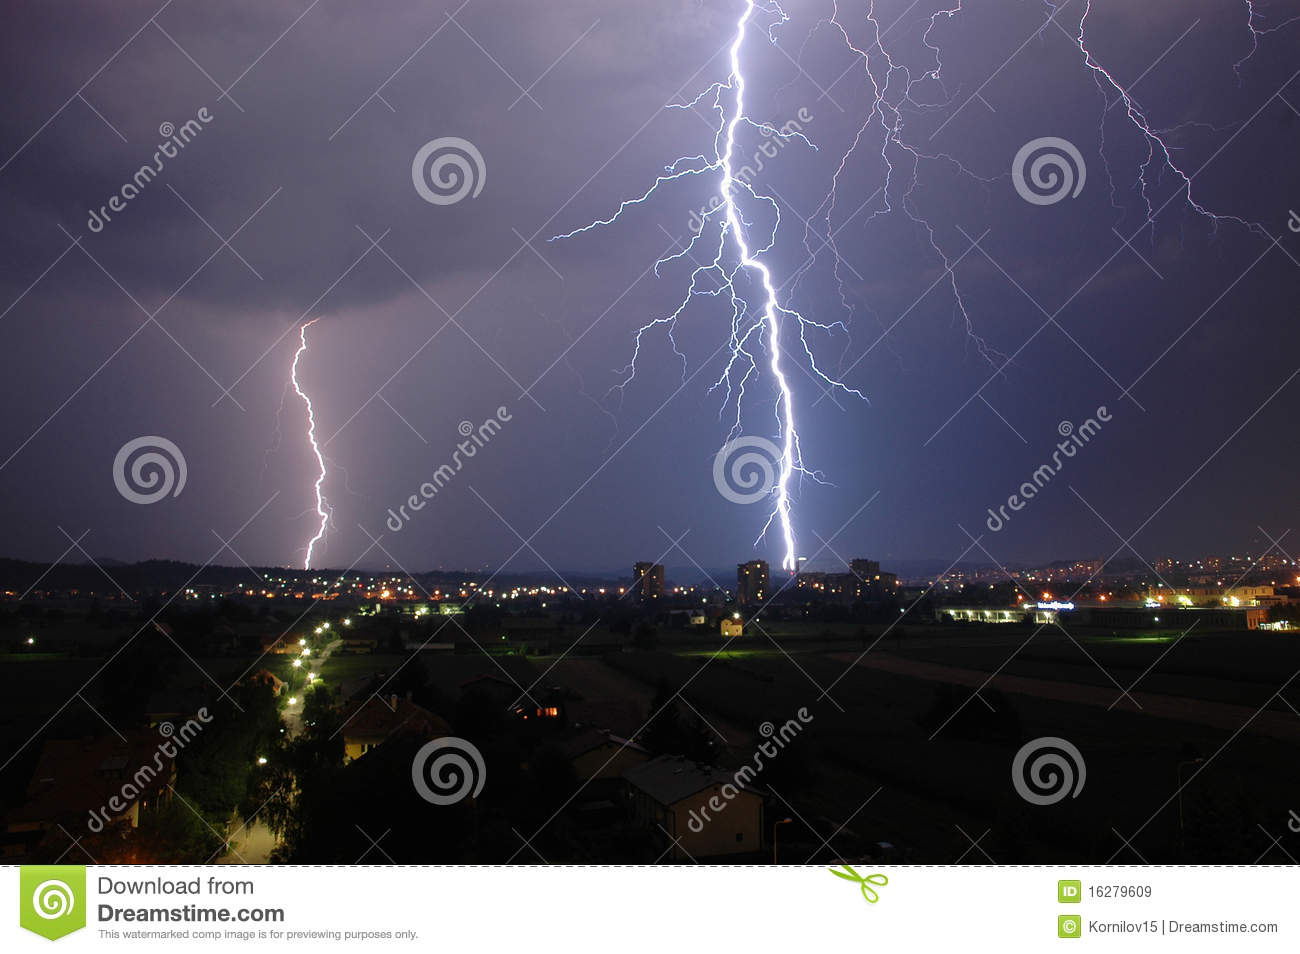 Thunder And Lightning Royalty Free Stock Images   Image  16279609